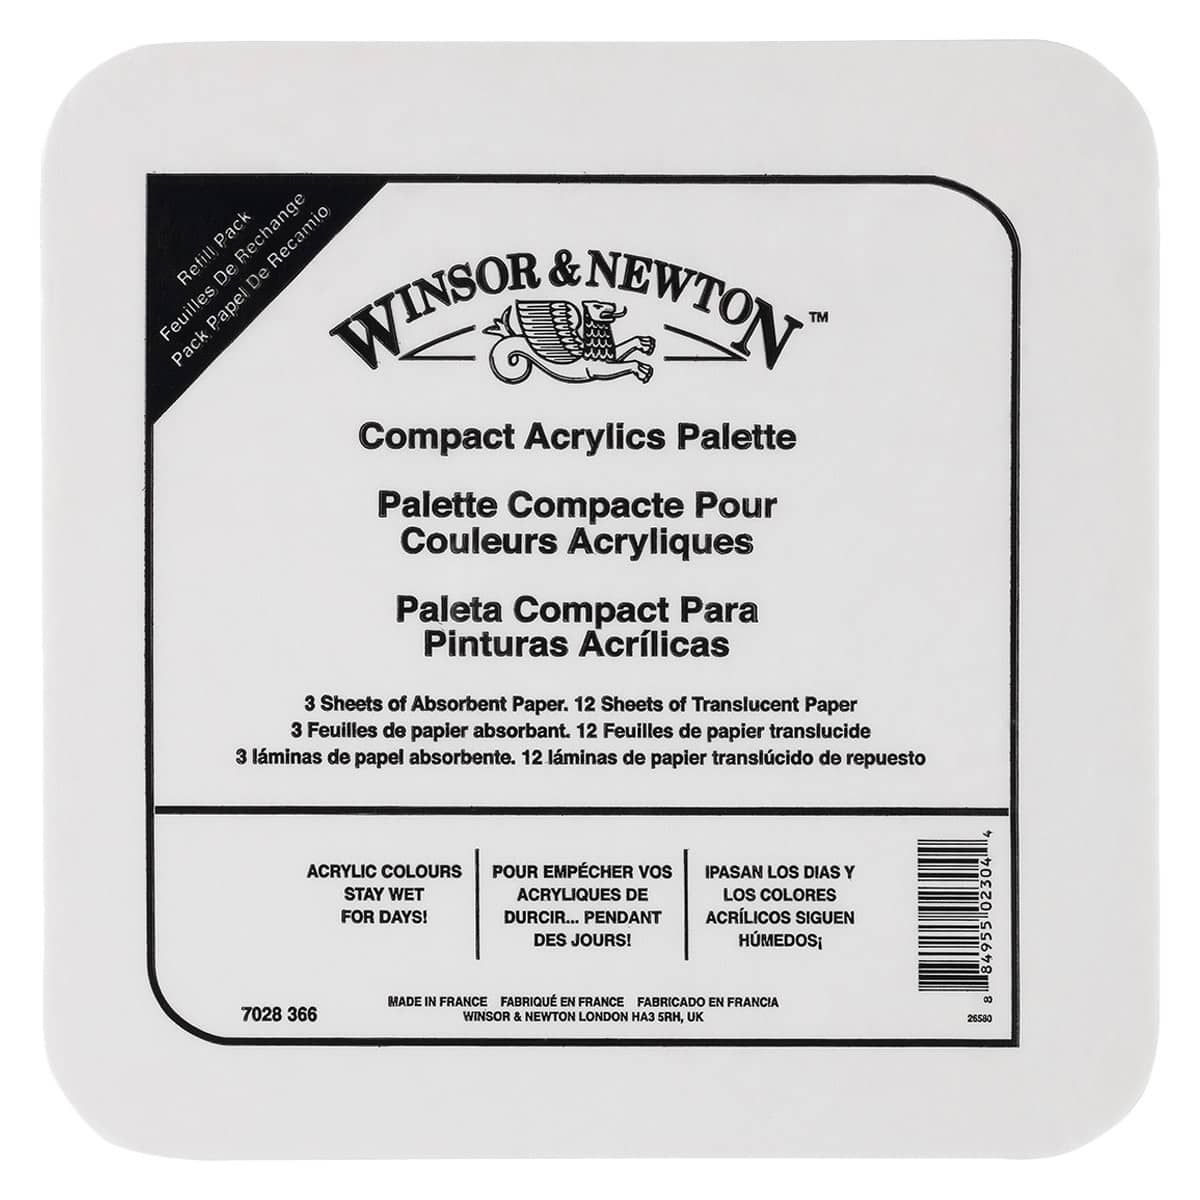 Winsor & Newton Acrylic Stay Wet Palette Refills